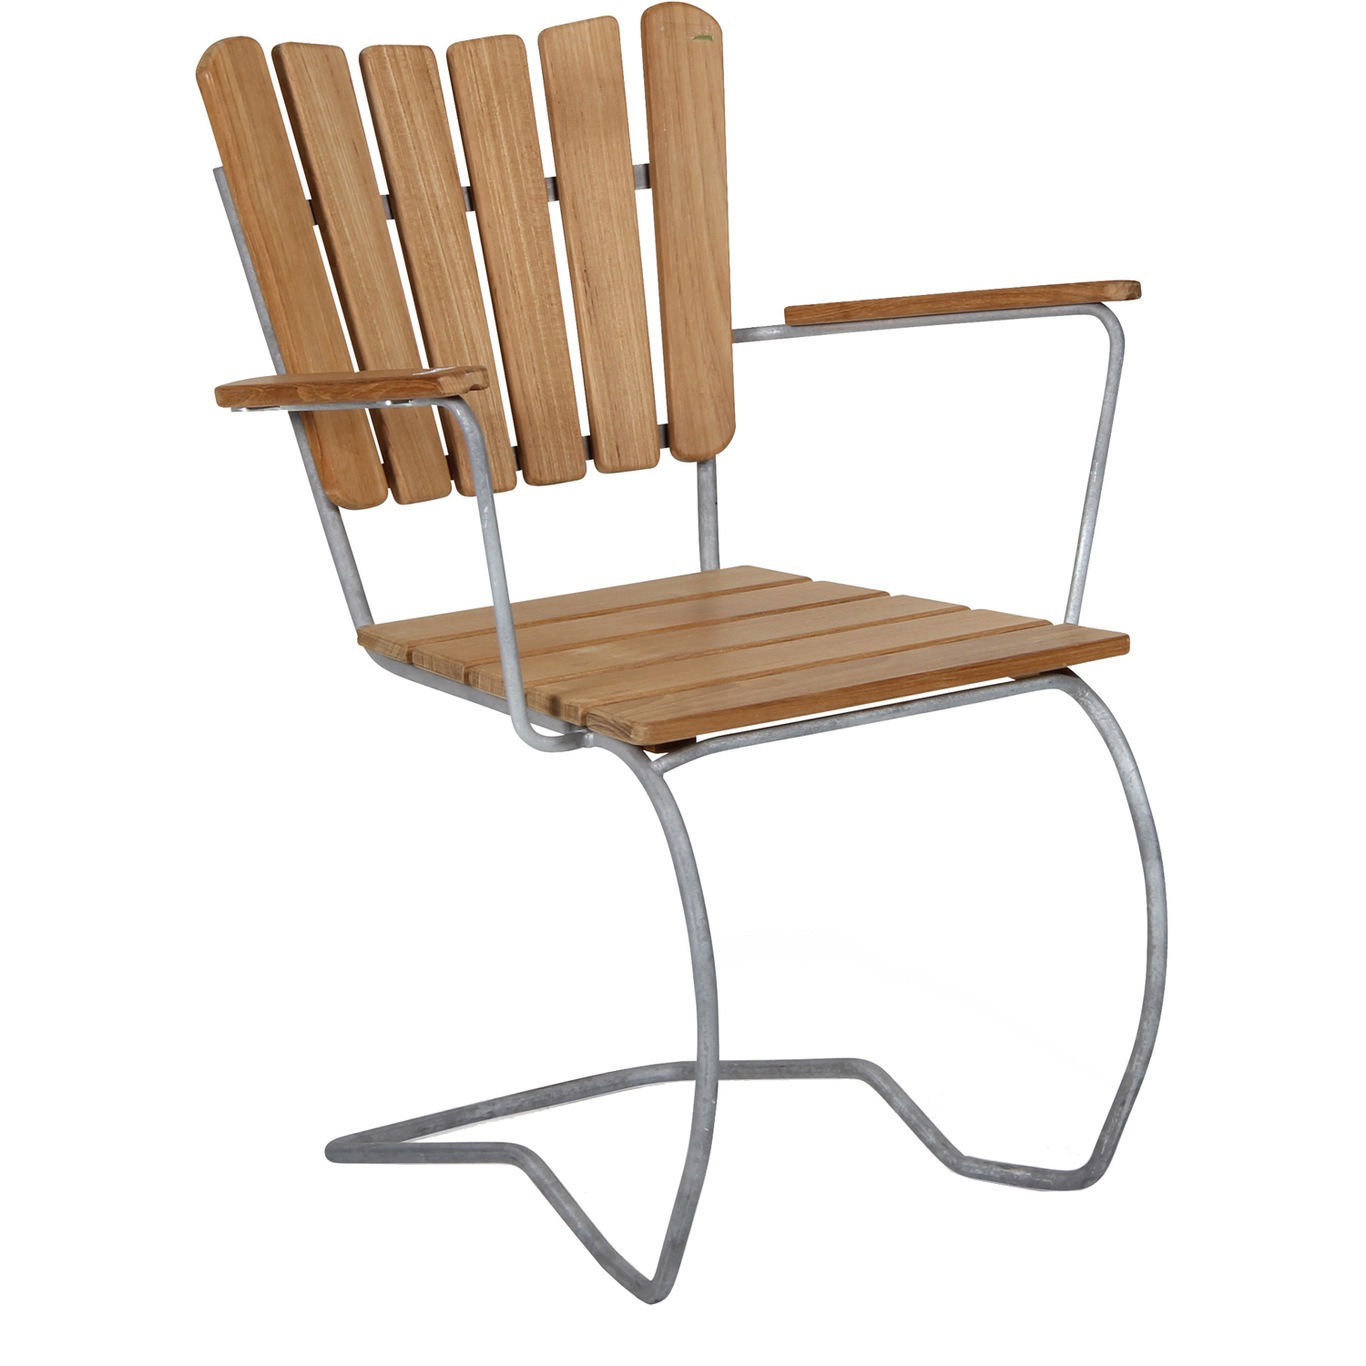 56:An Chair, Galvanized/Teak